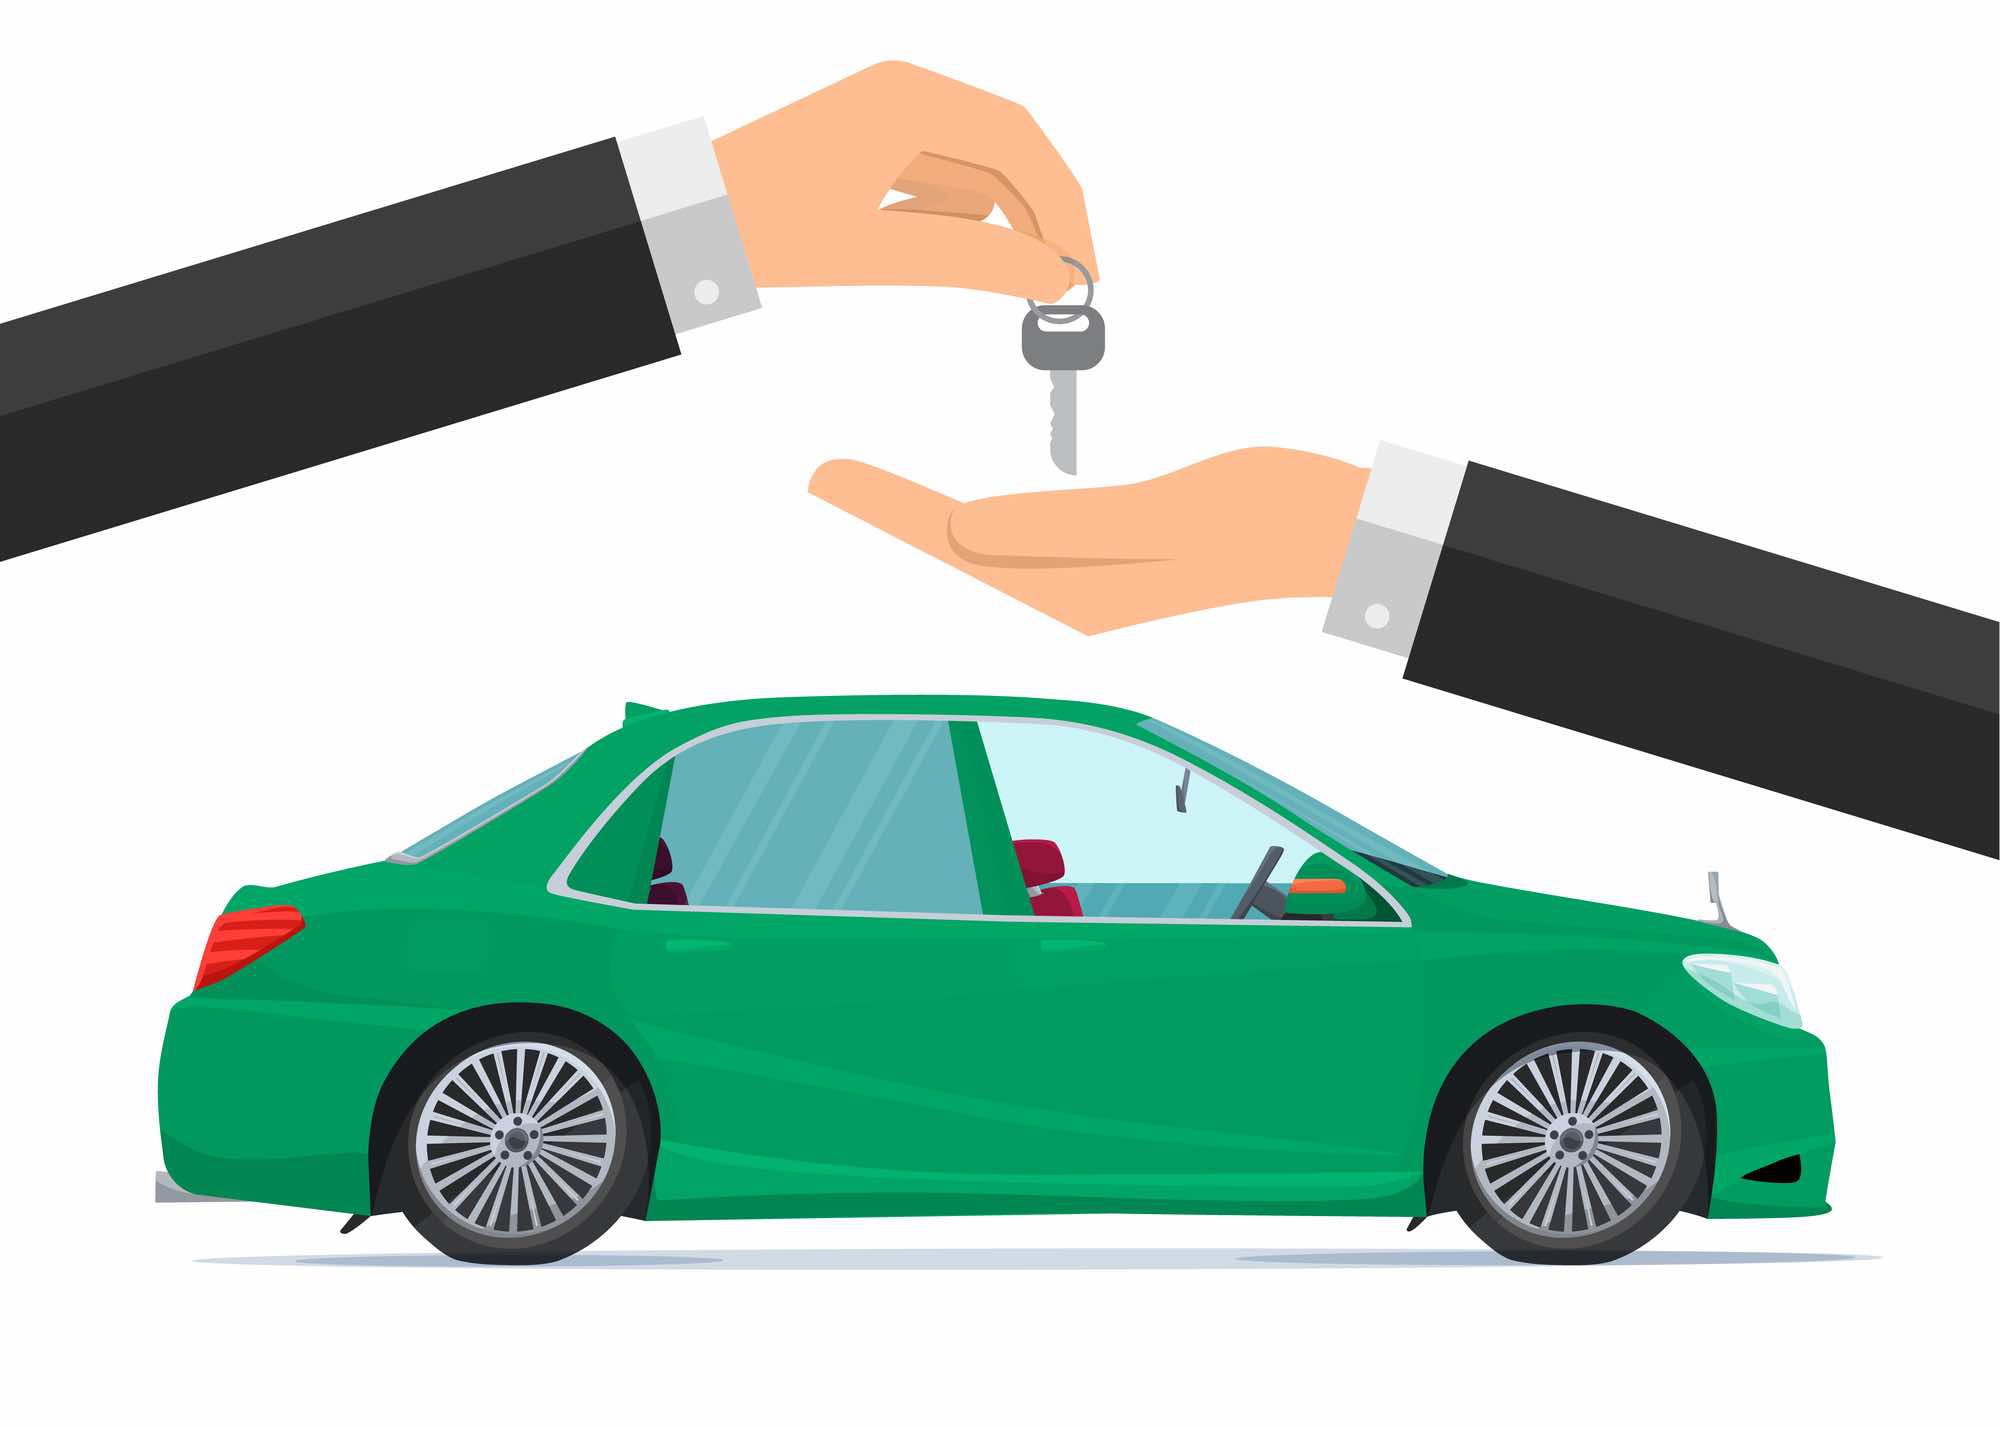 spoelen regeling binnenkomst Auto Verkopen: Wat Heb Je Nodig? - Info Over Papieren & Tips